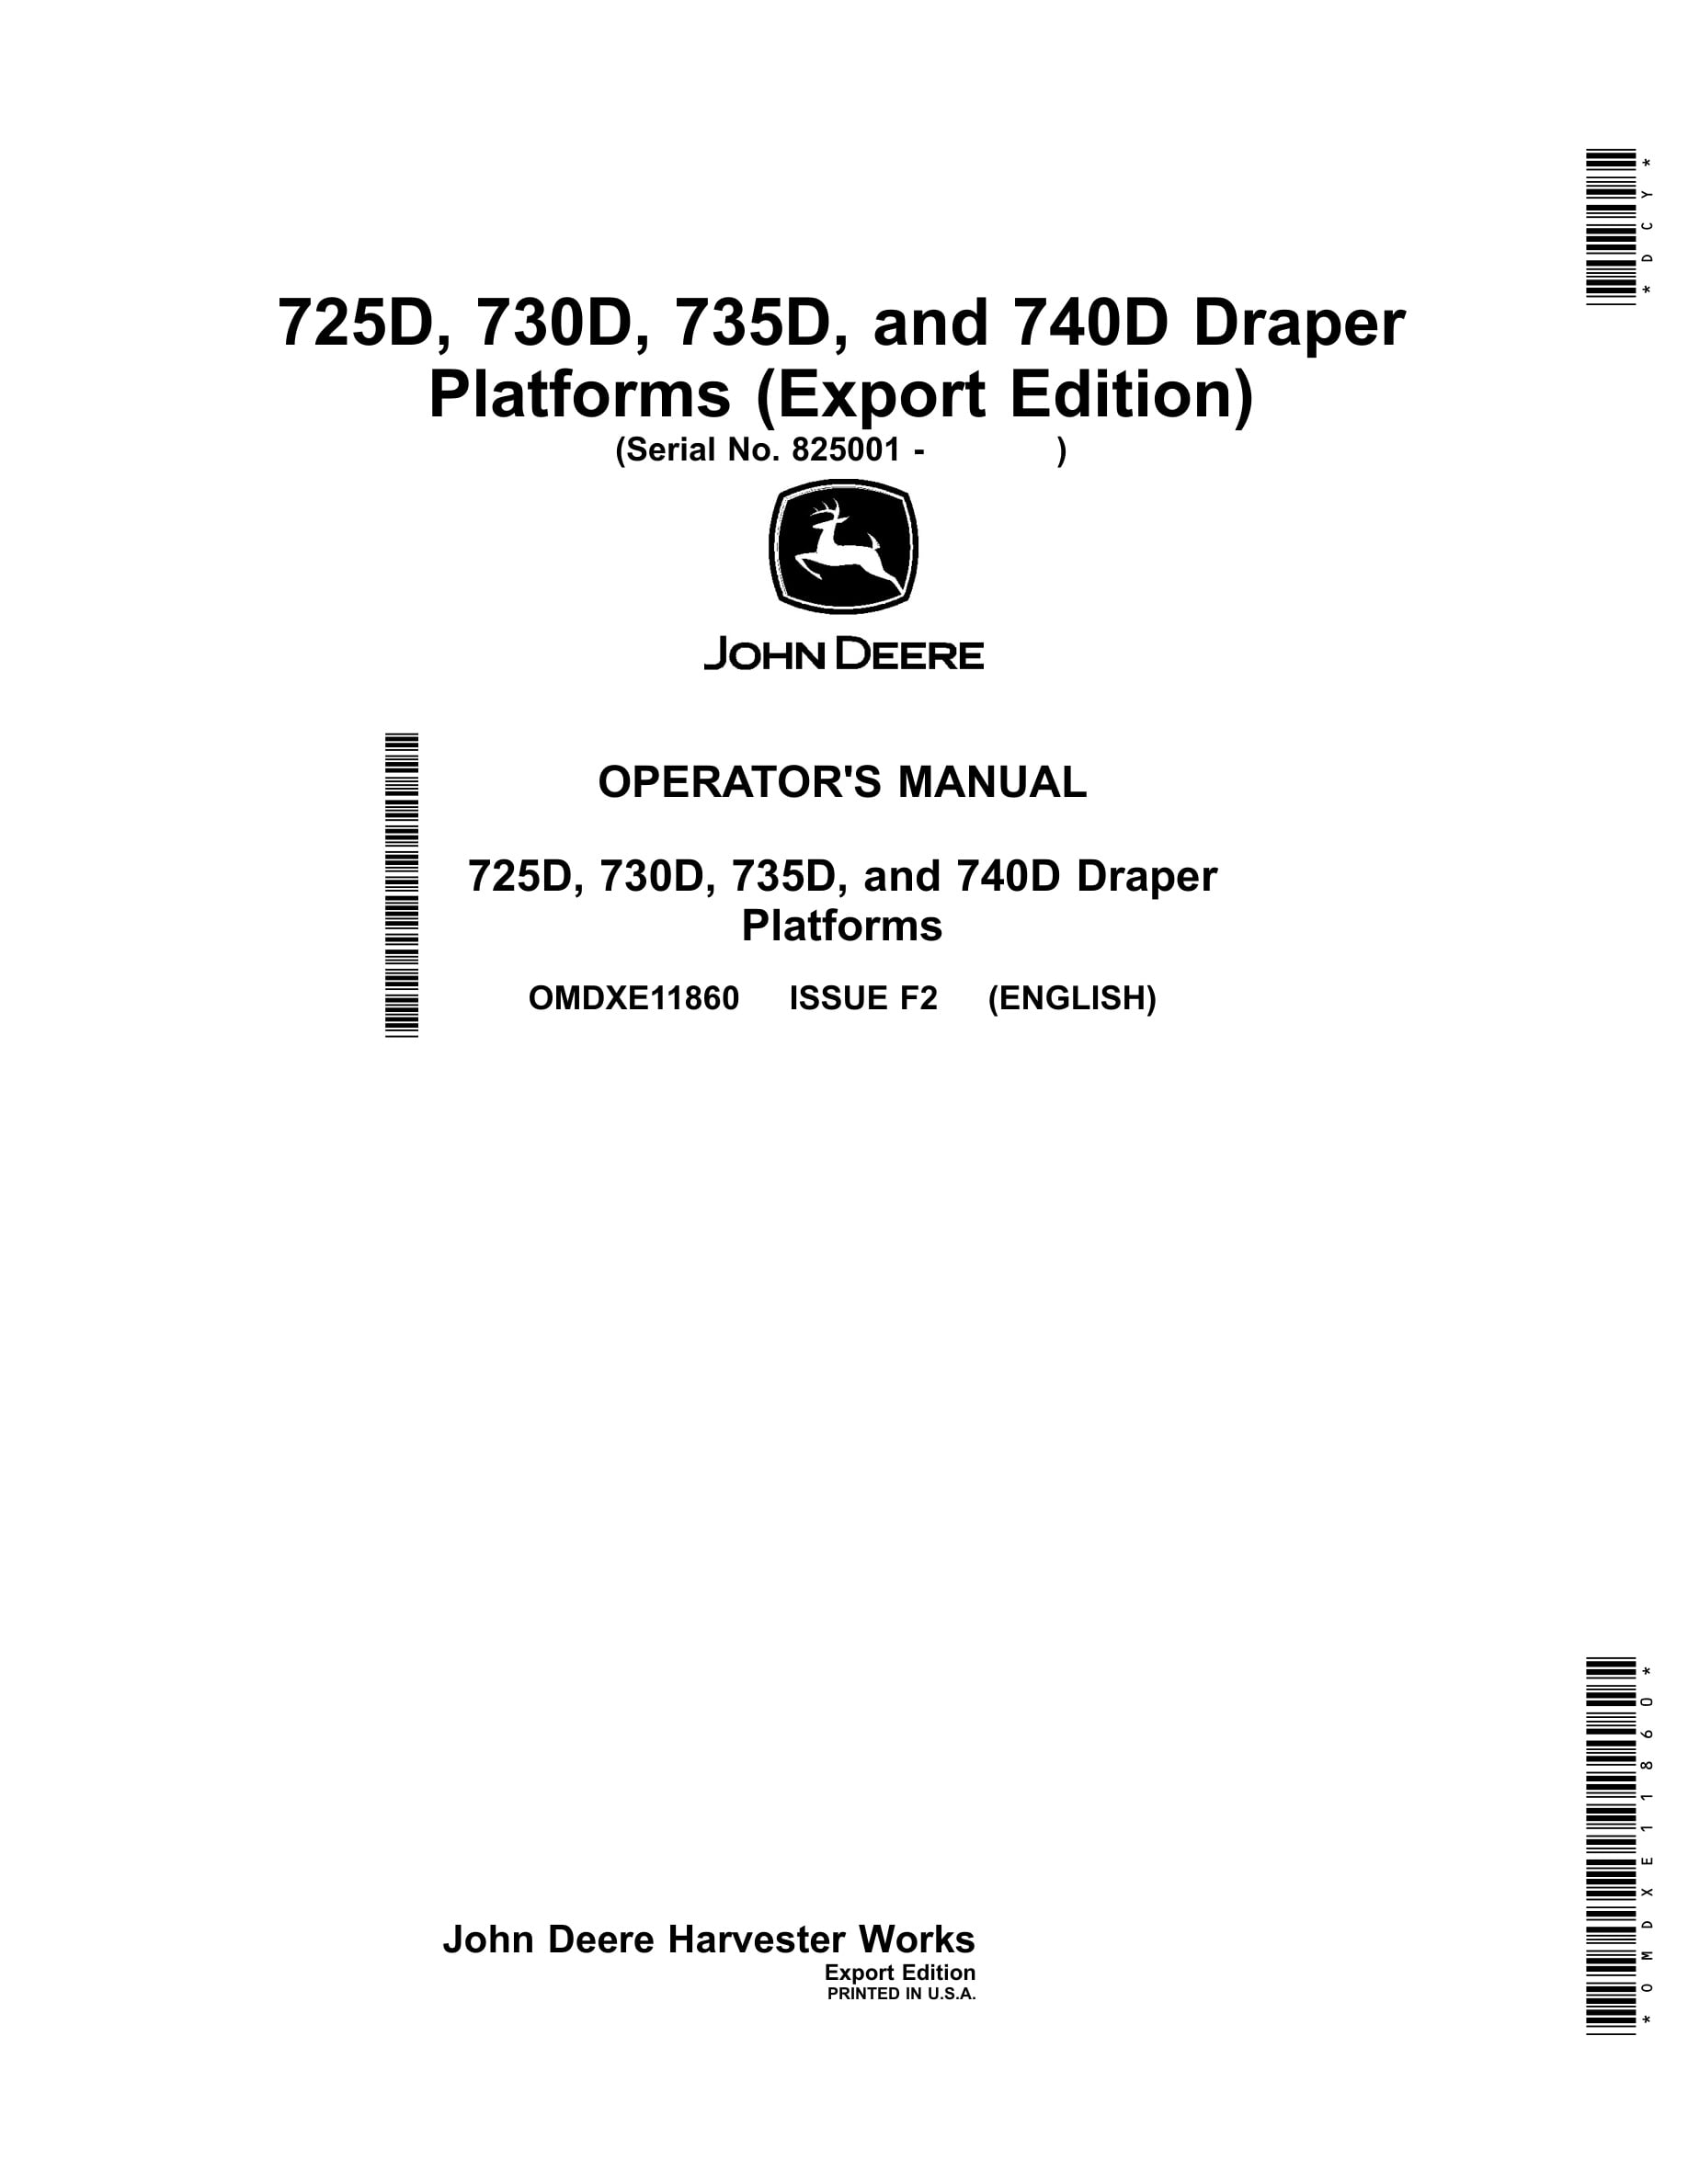 John Deere 725D, 730D, 735D, and 740D Draper Platforms Operator Manual OMDXE11860-1